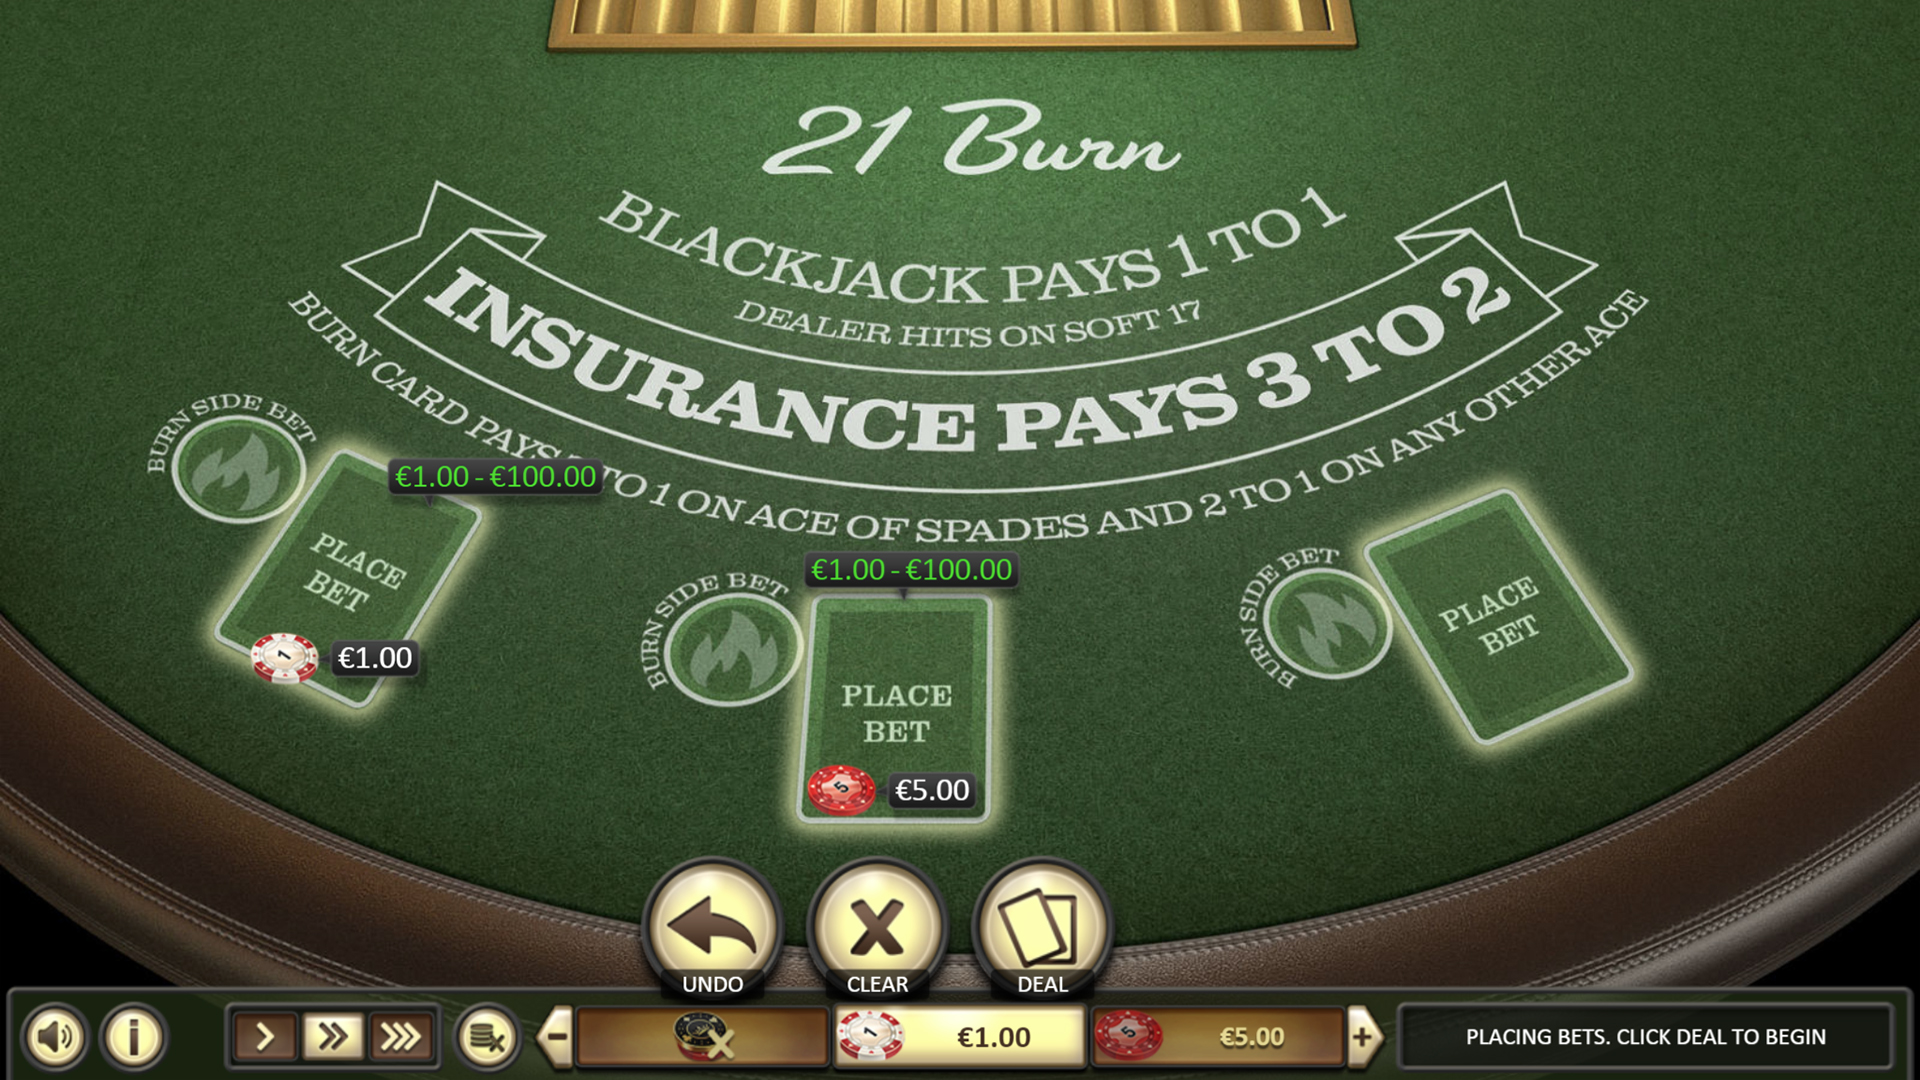 21 Burn Blackjack - Screenshot 02